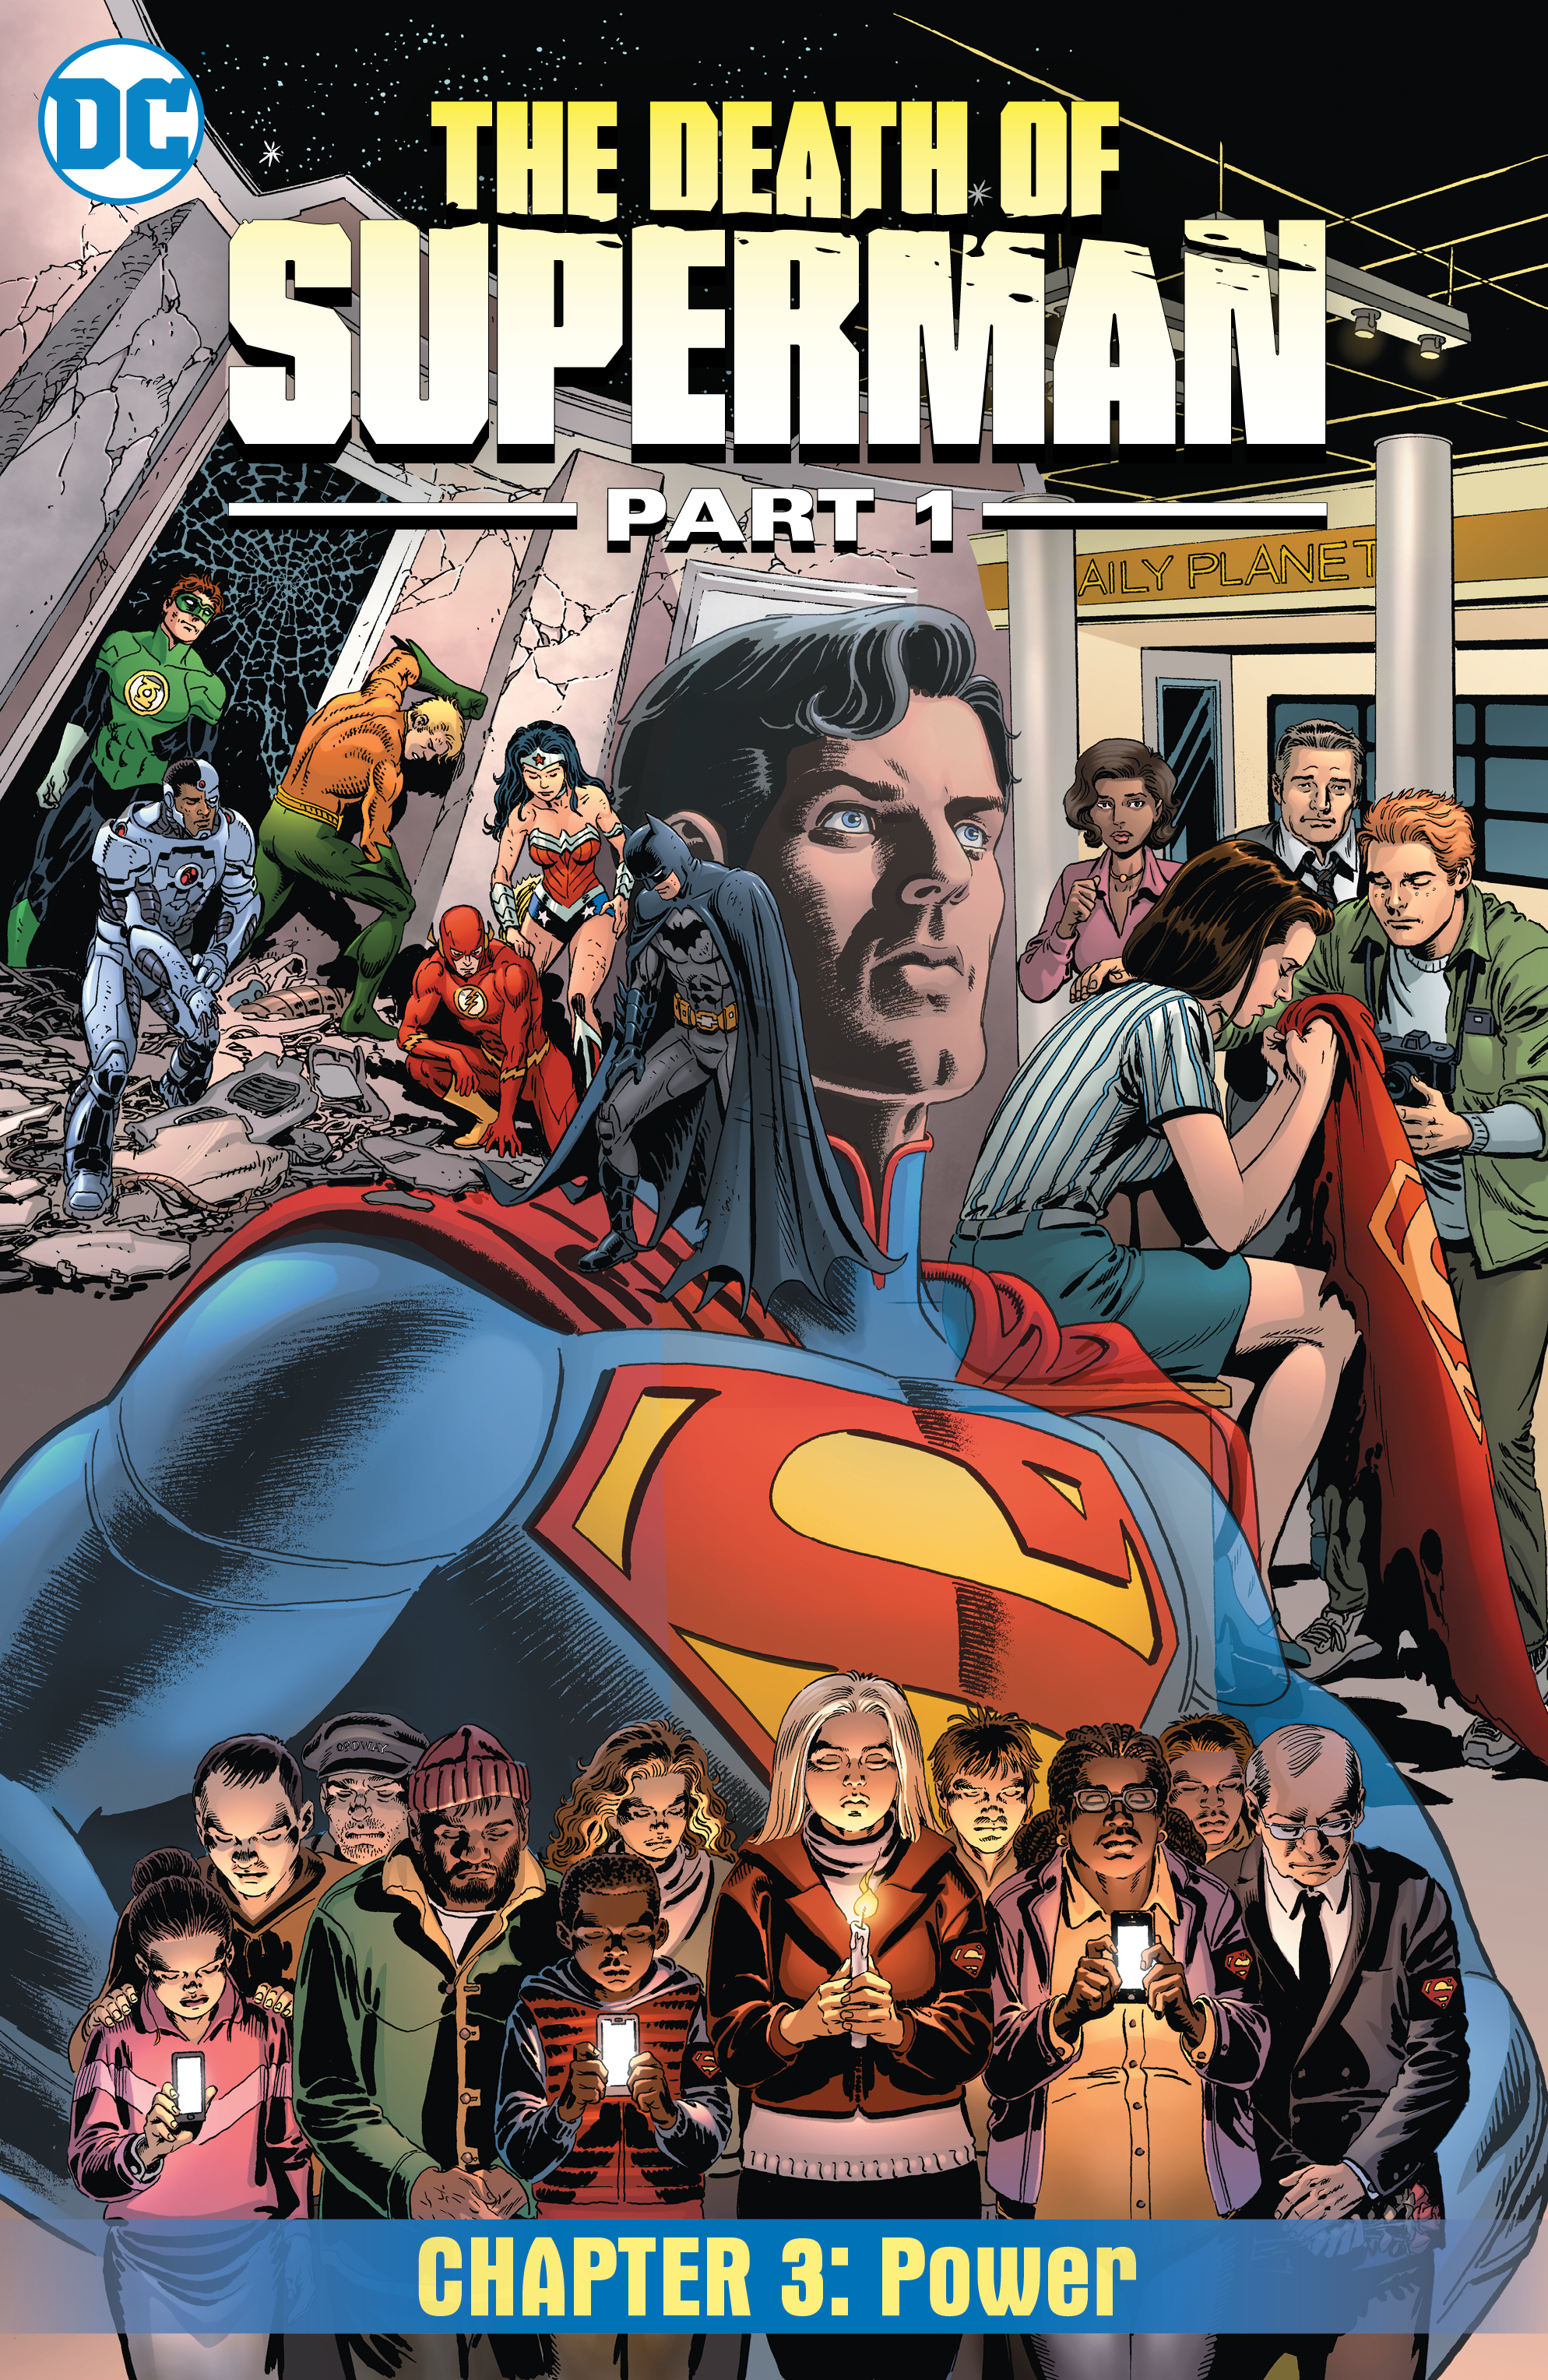 Death of Superman, Part 1 #3 preview images